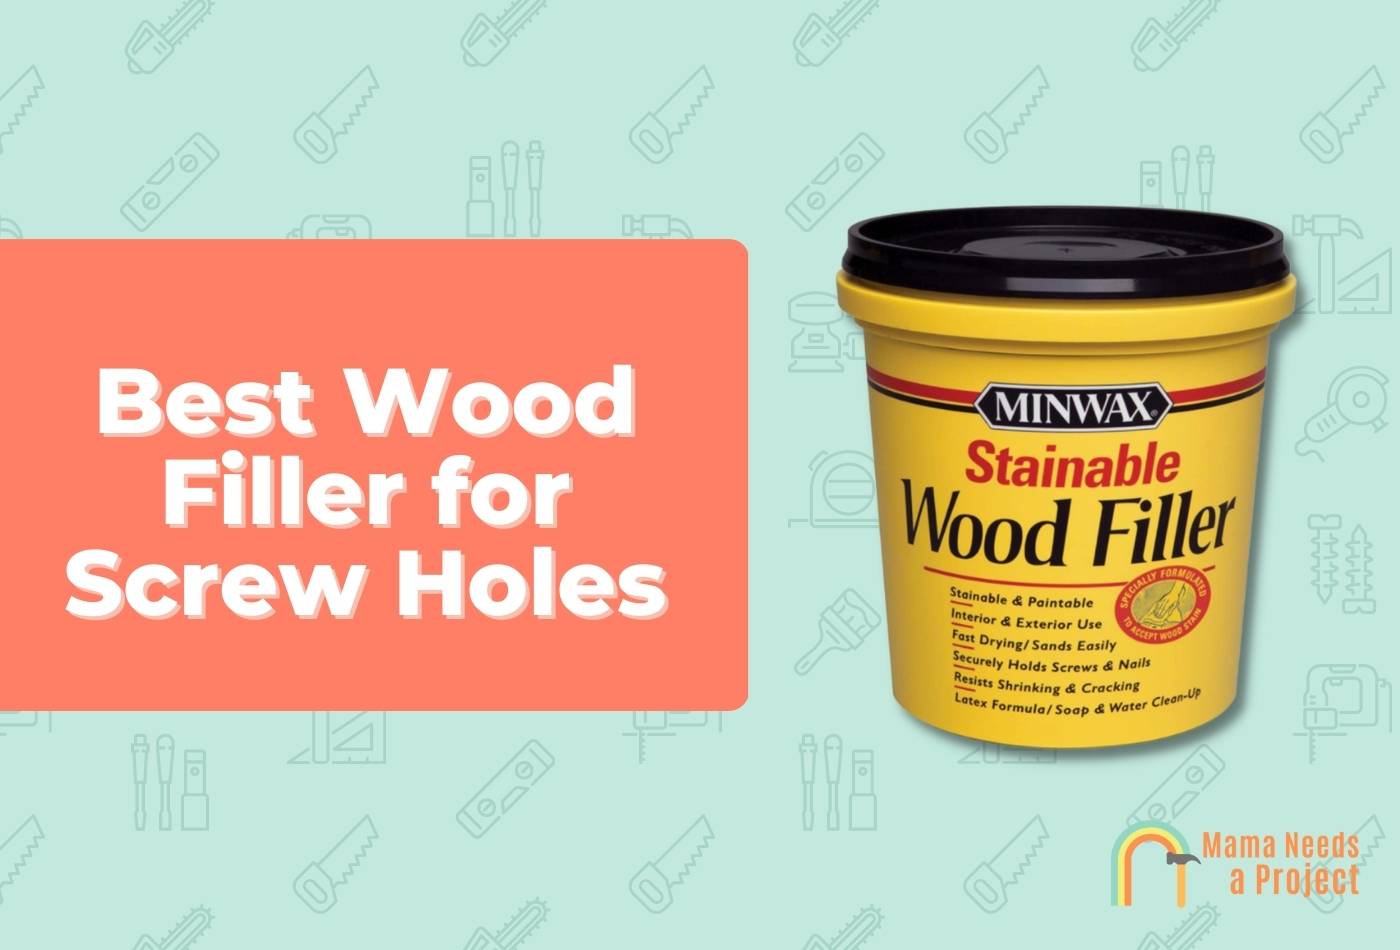 Best Wood Filler for Screw Holes